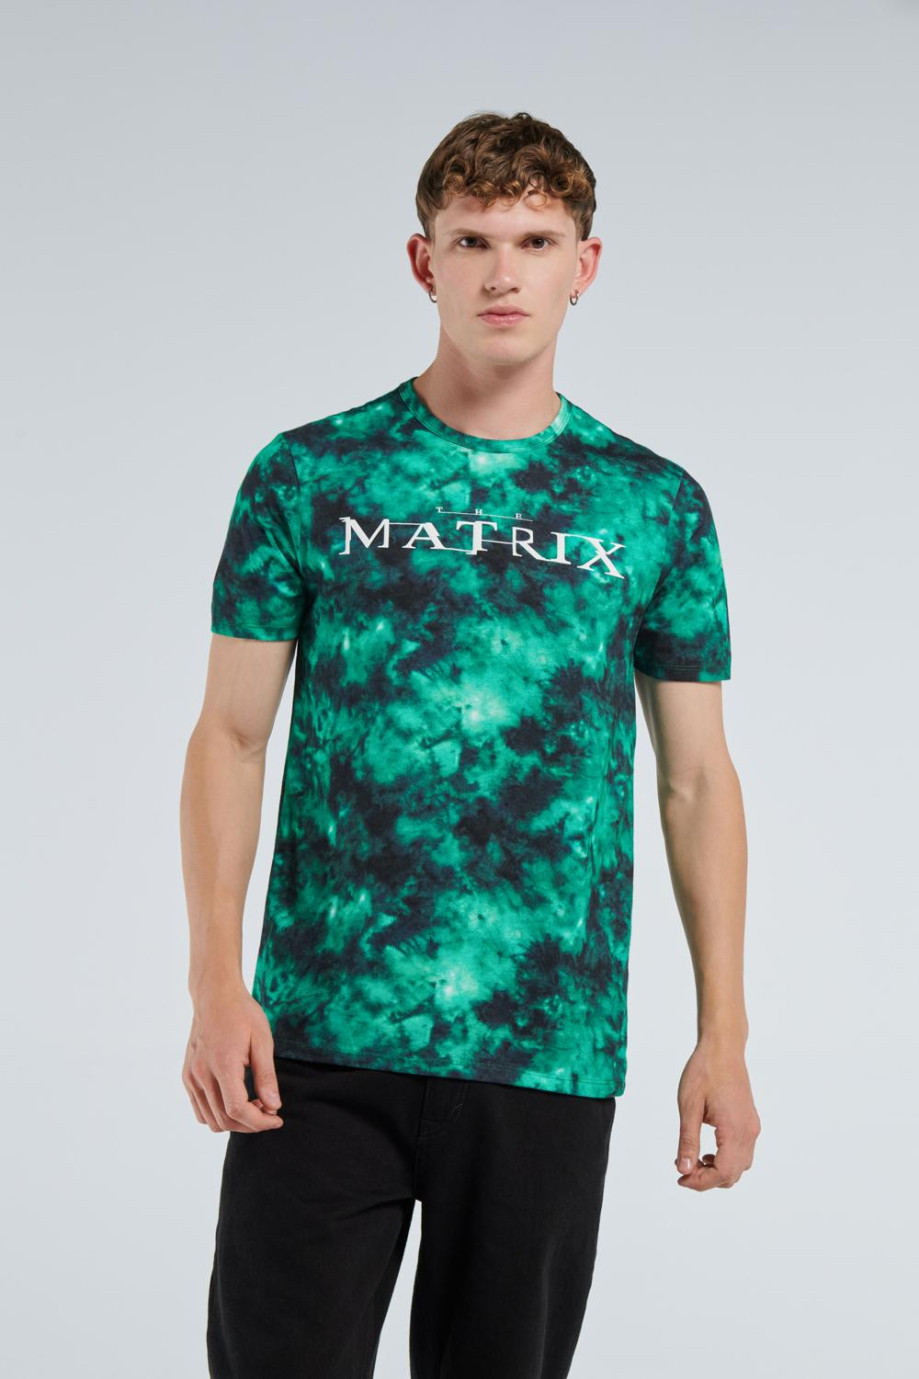 Camiseta cuello redondo verde oscura tie dye con diseño de Matrix